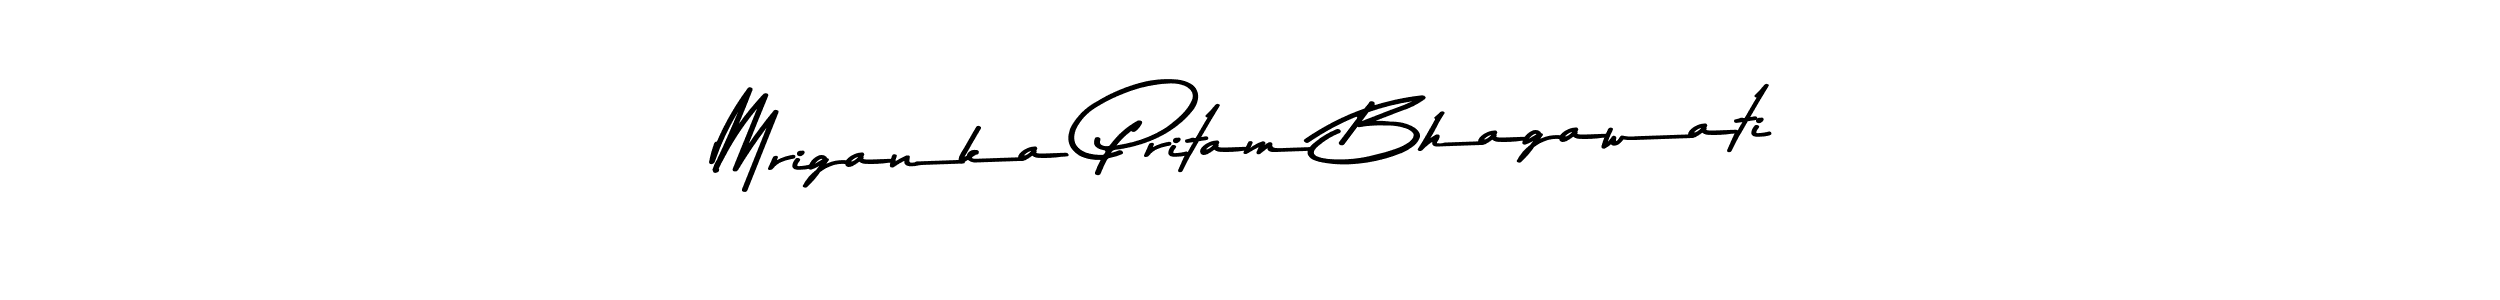 How to make Mriganka Pritam Bhagawati signature? Asem Kandis PERSONAL USE is a professional autograph style. Create handwritten signature for Mriganka Pritam Bhagawati name. Mriganka Pritam Bhagawati signature style 9 images and pictures png